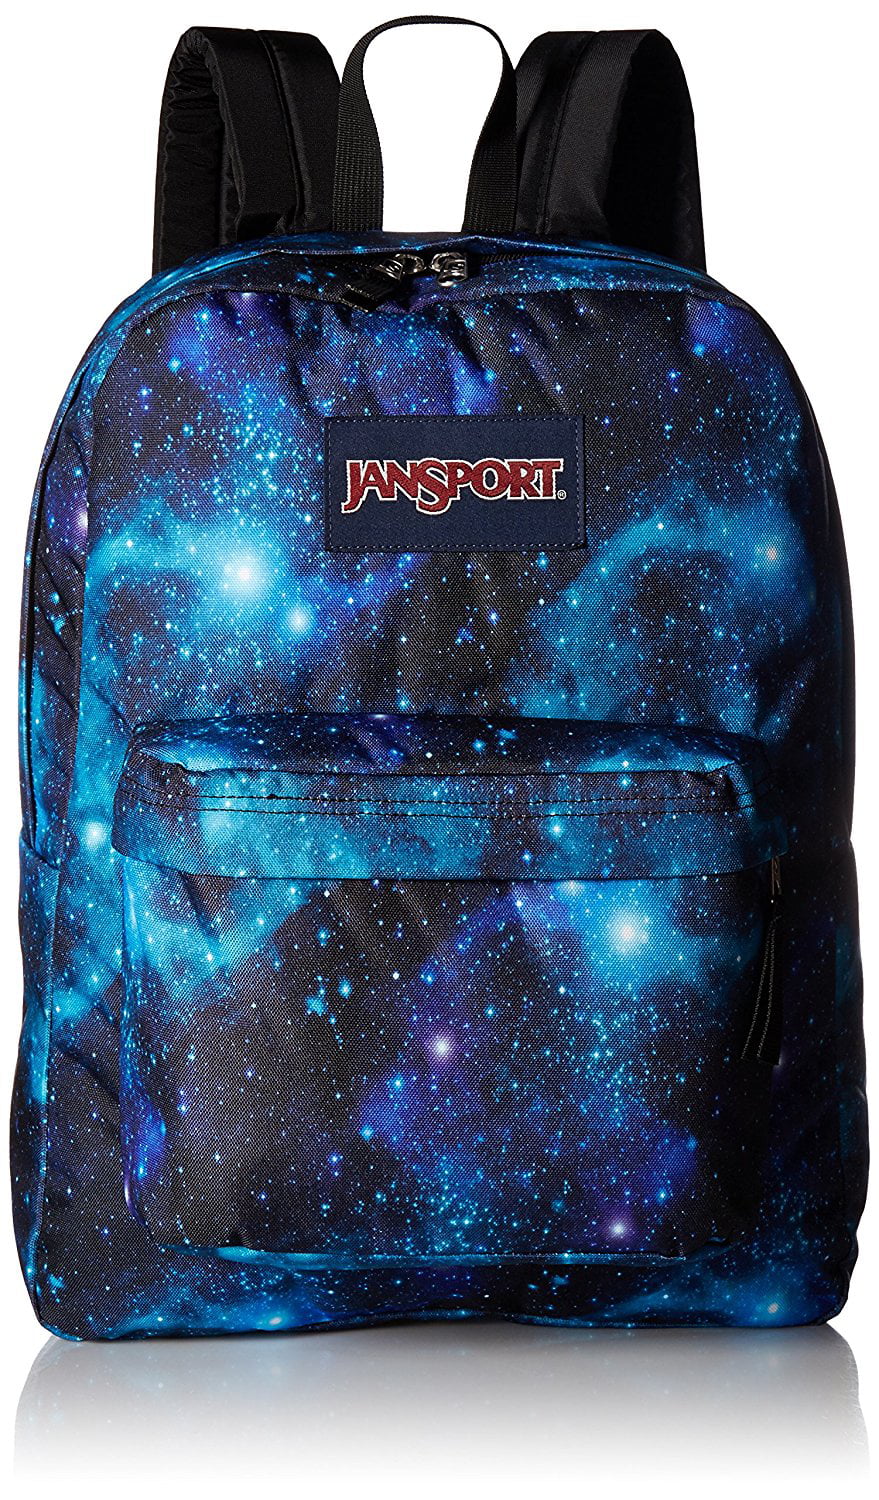 jansport galaxy bag